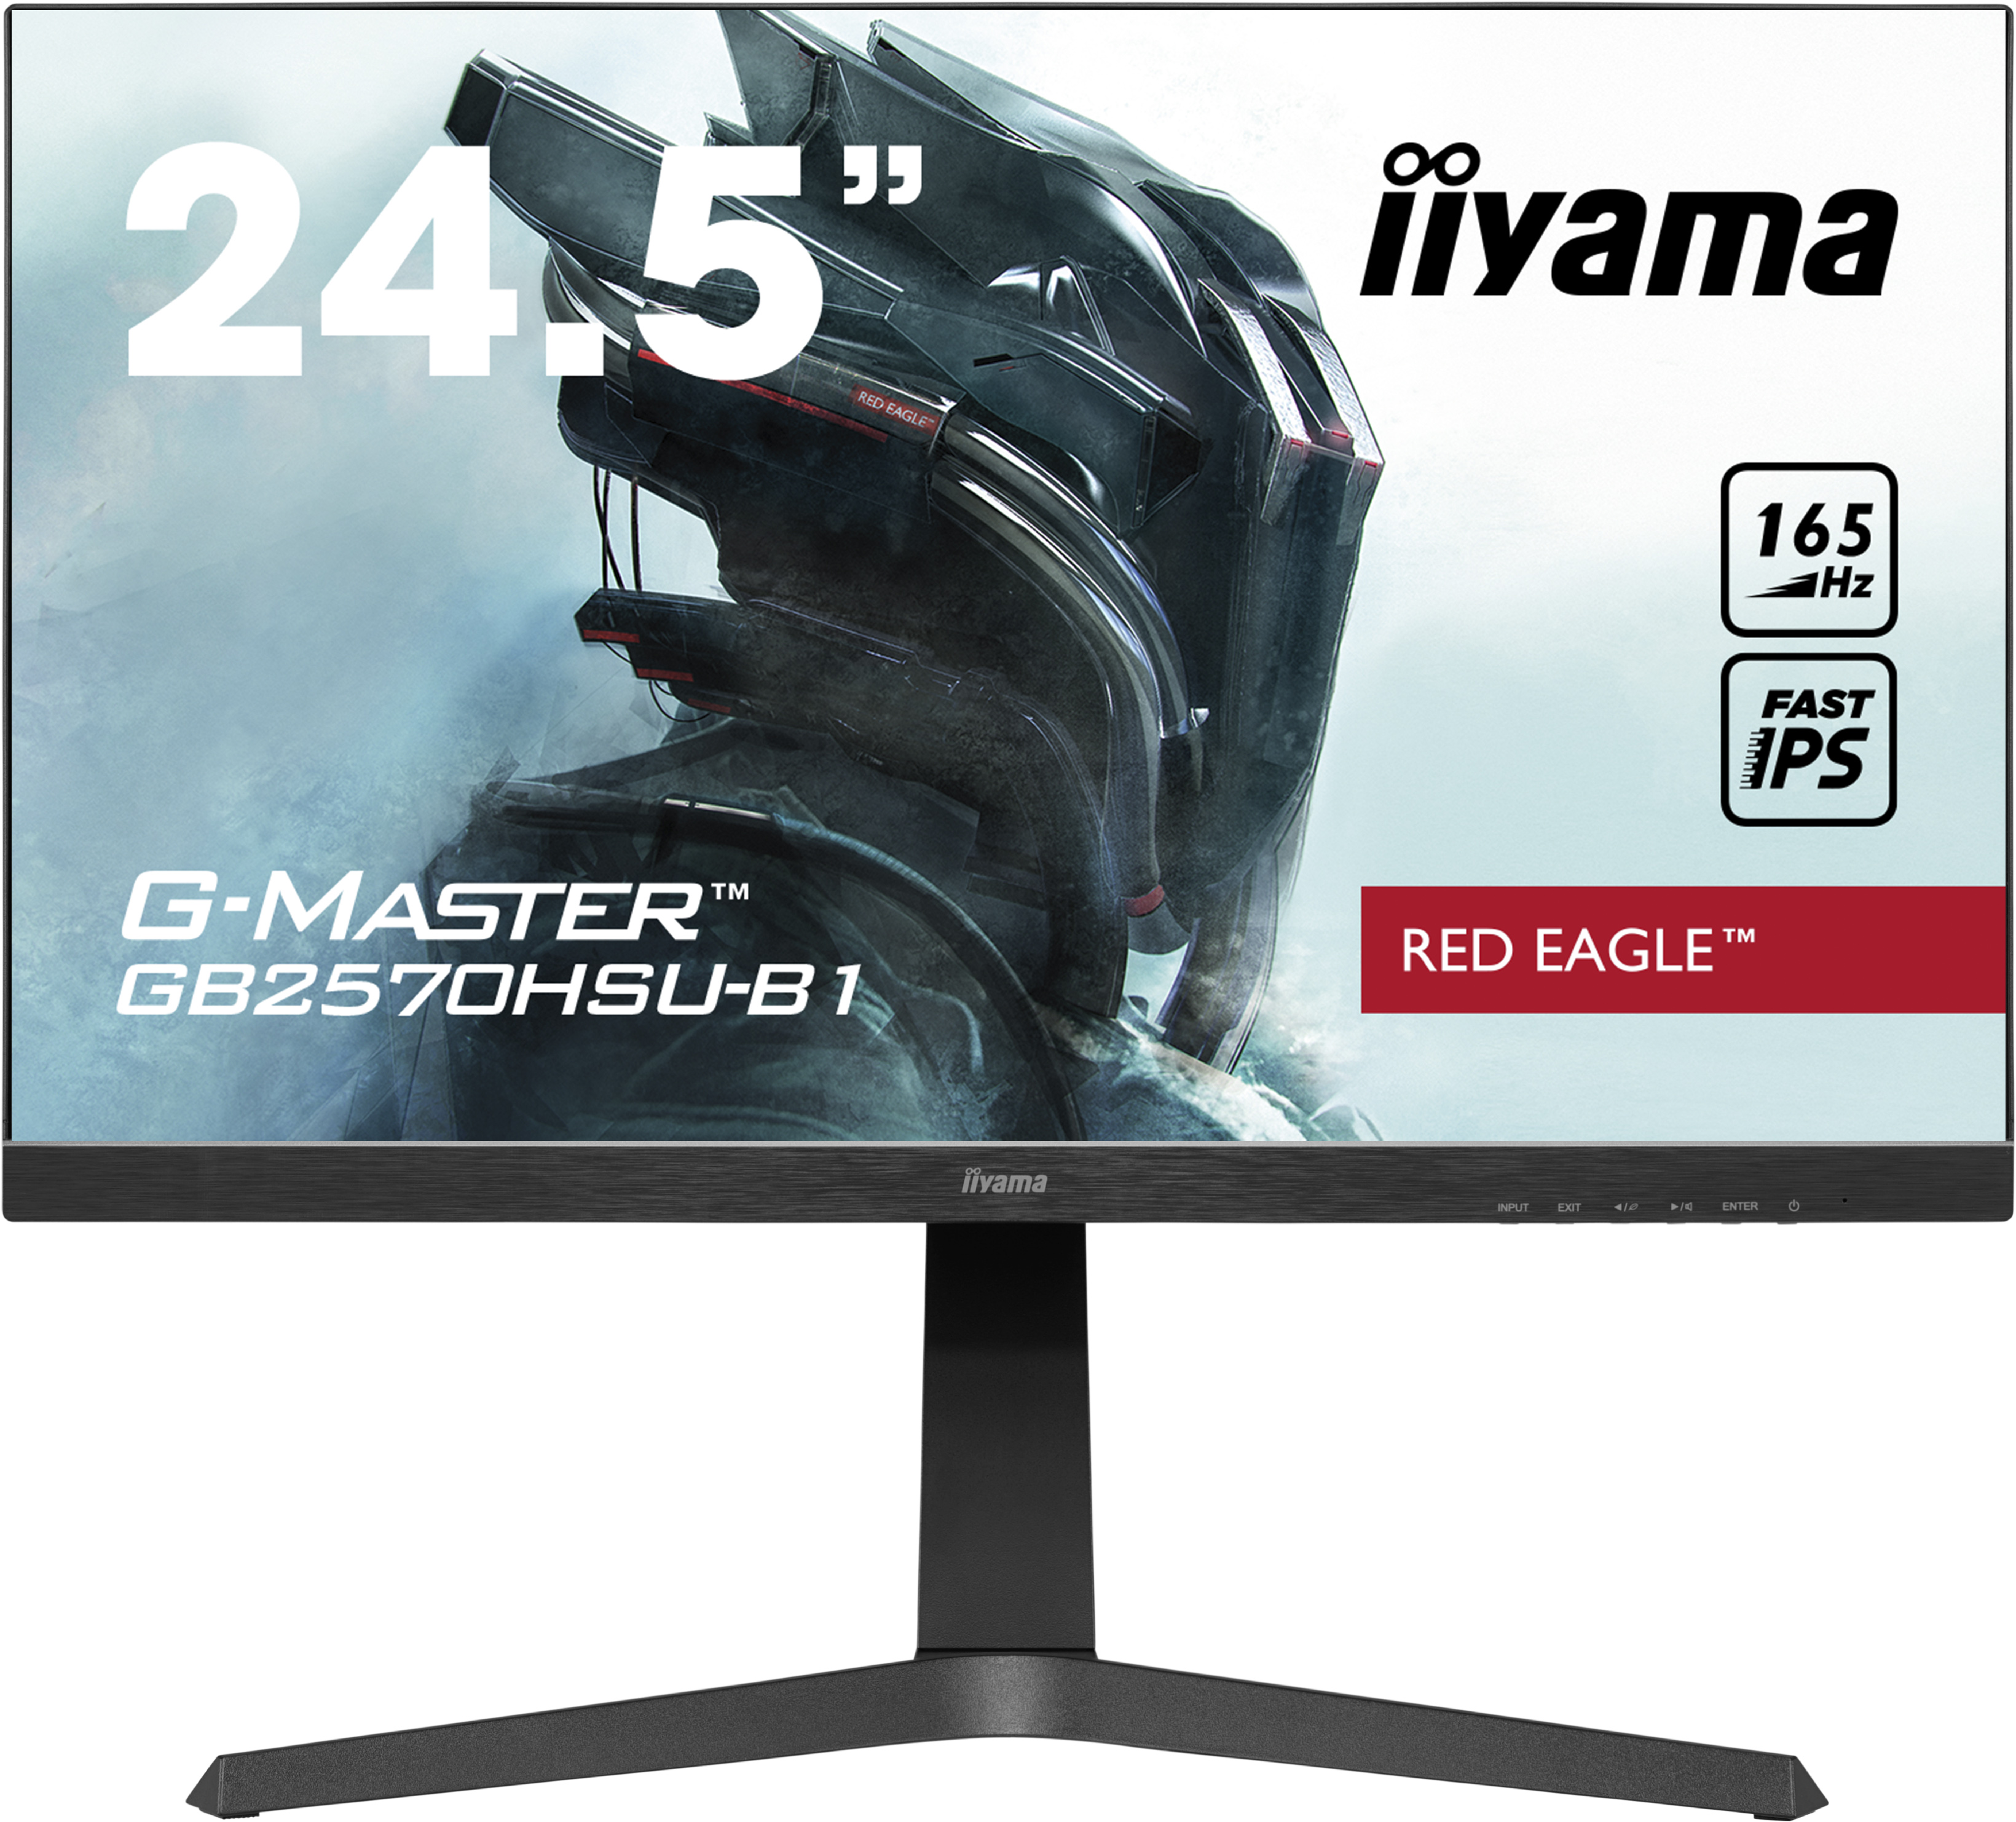 Iiyama G-MASTER GB2570HSU-B1 RED EAGLE | 24,5" | 1920 x 1080 @165Hz (2.1 megapixel Full HD) | Gaming Monitor